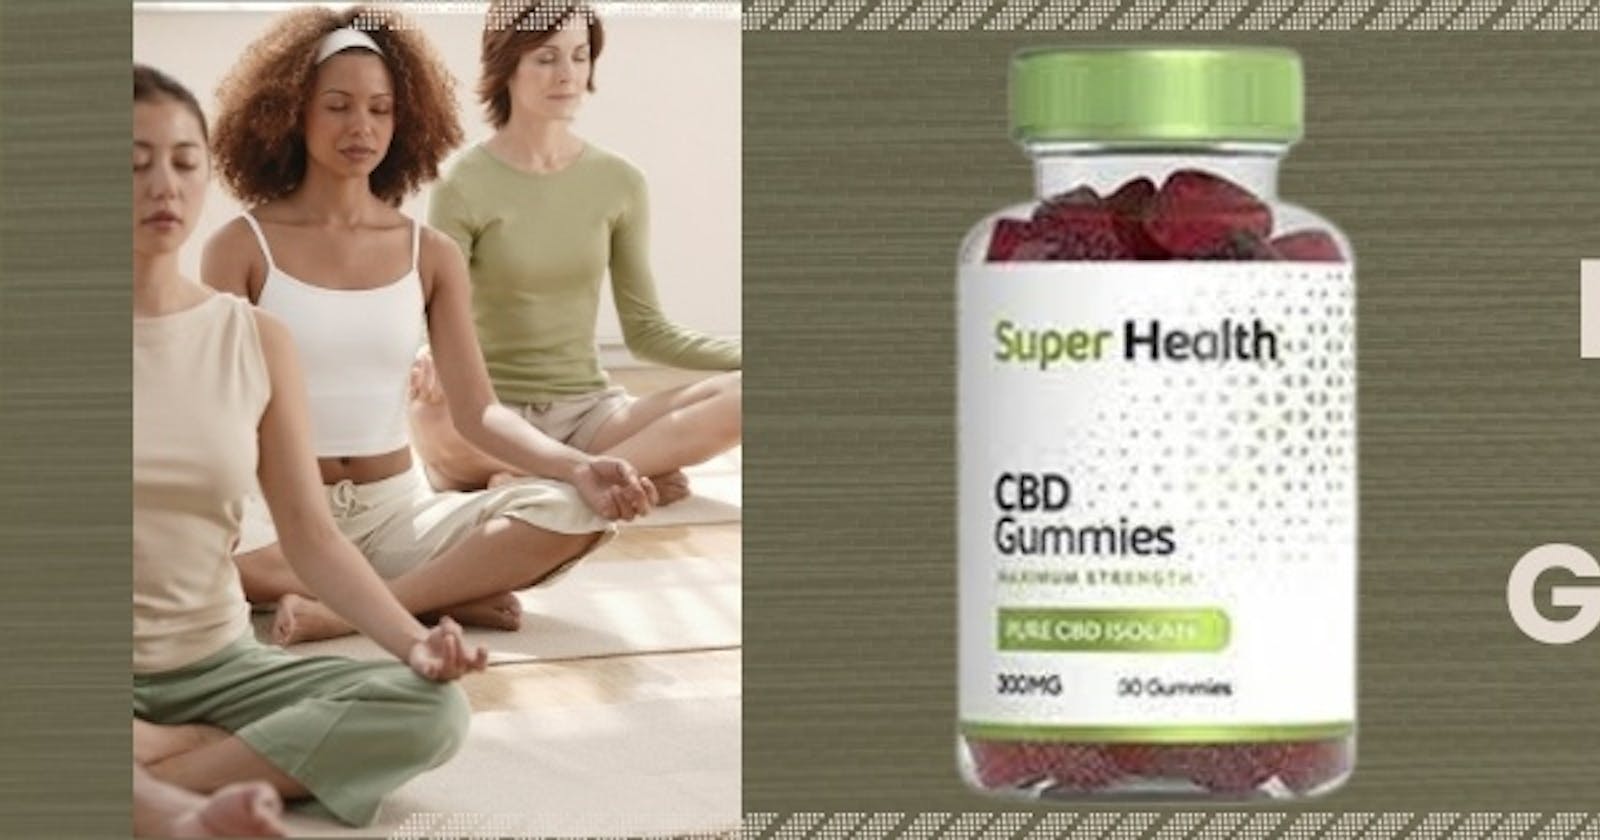 Super Health CBD Gummies For ED Reviews?